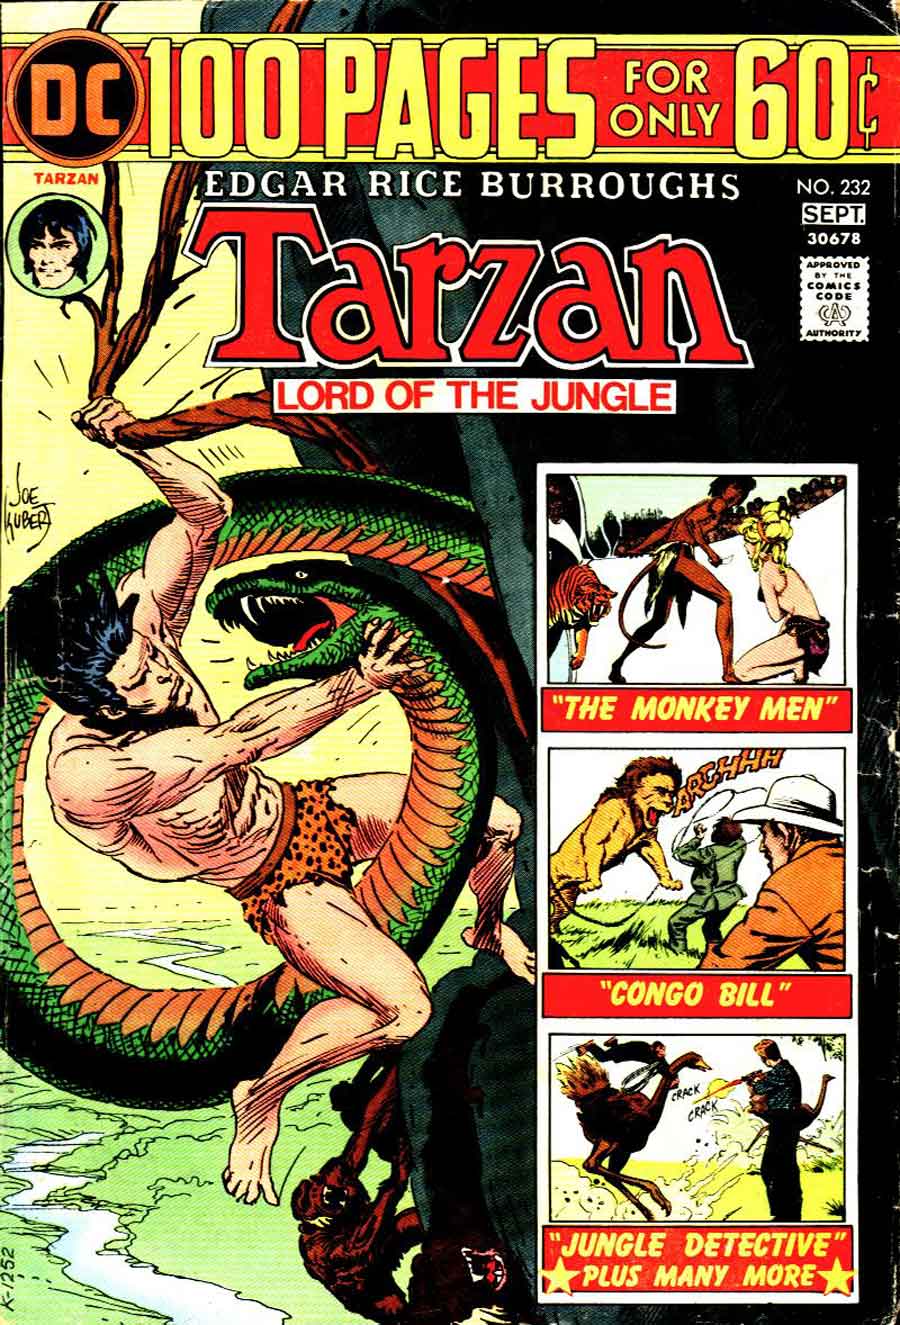 Tarzan v1 #232 dc comic book cover art by Joe Kubert